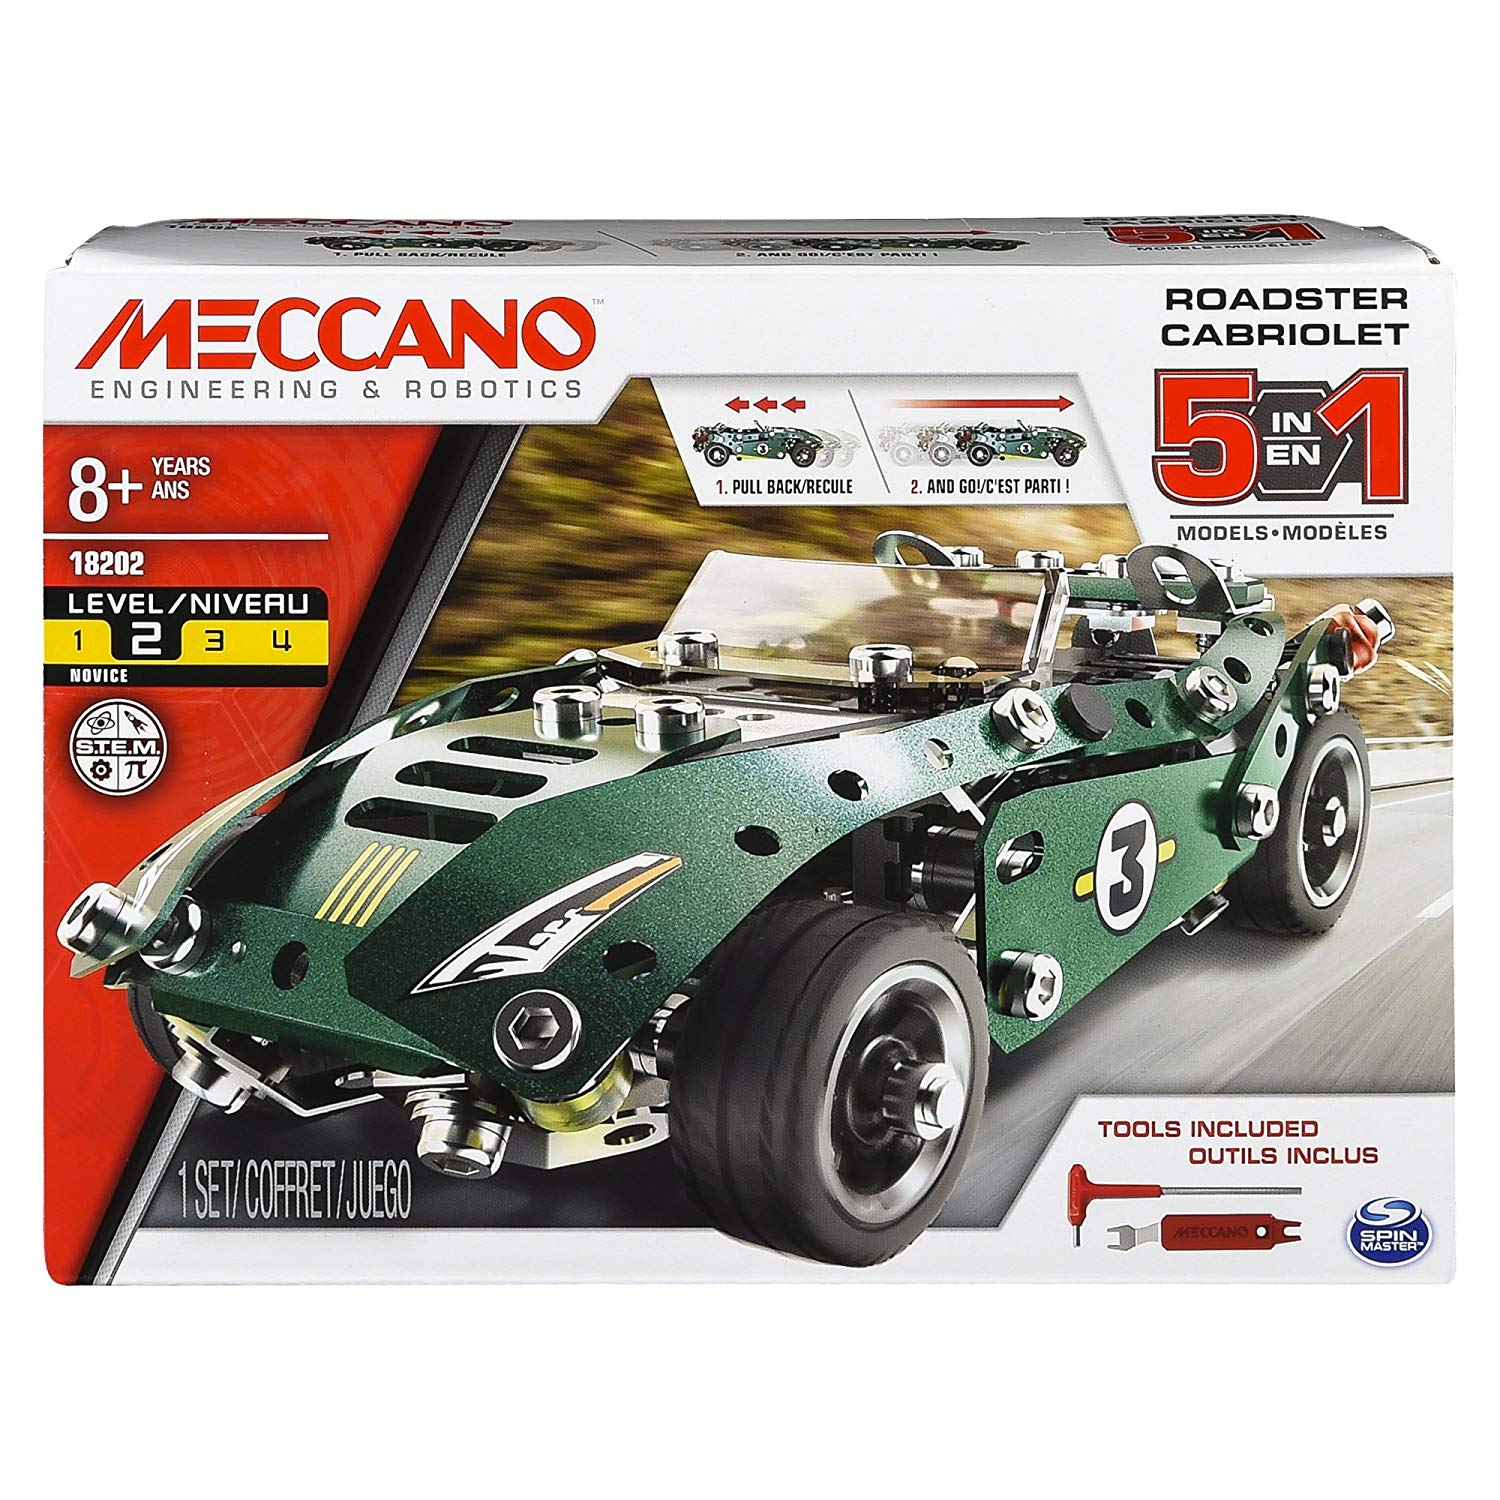 meccano car kit